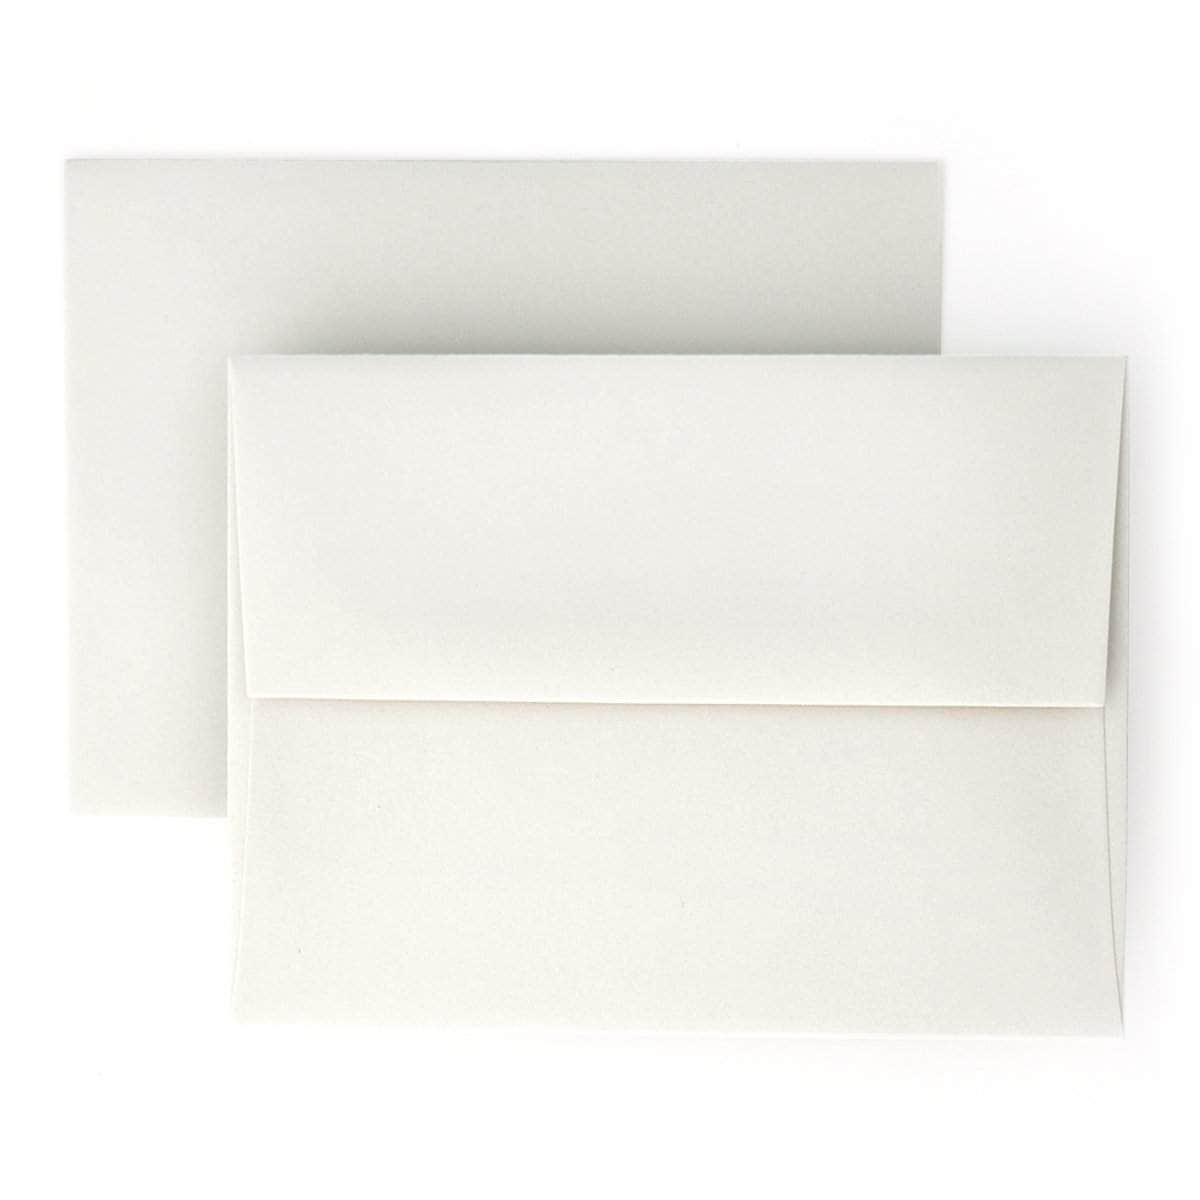 12x12 White Cardstock (10 sheet/set) (80lb)